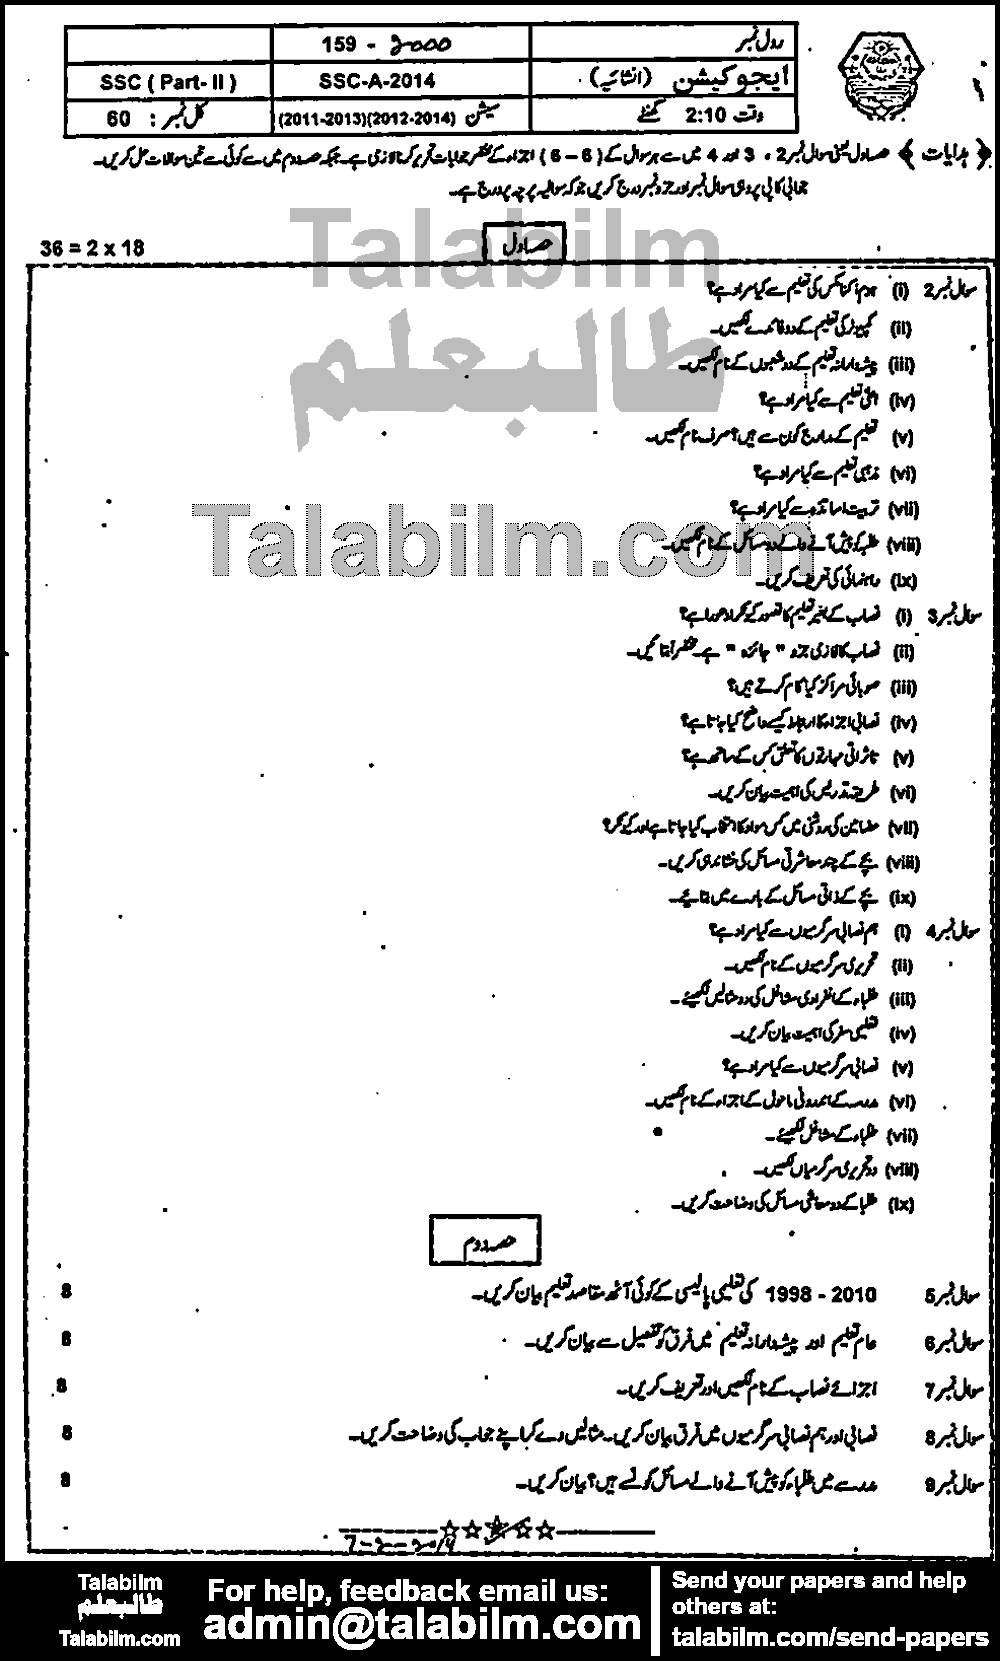 Education 0 past paper for Urdu Medium 2014 Group-I